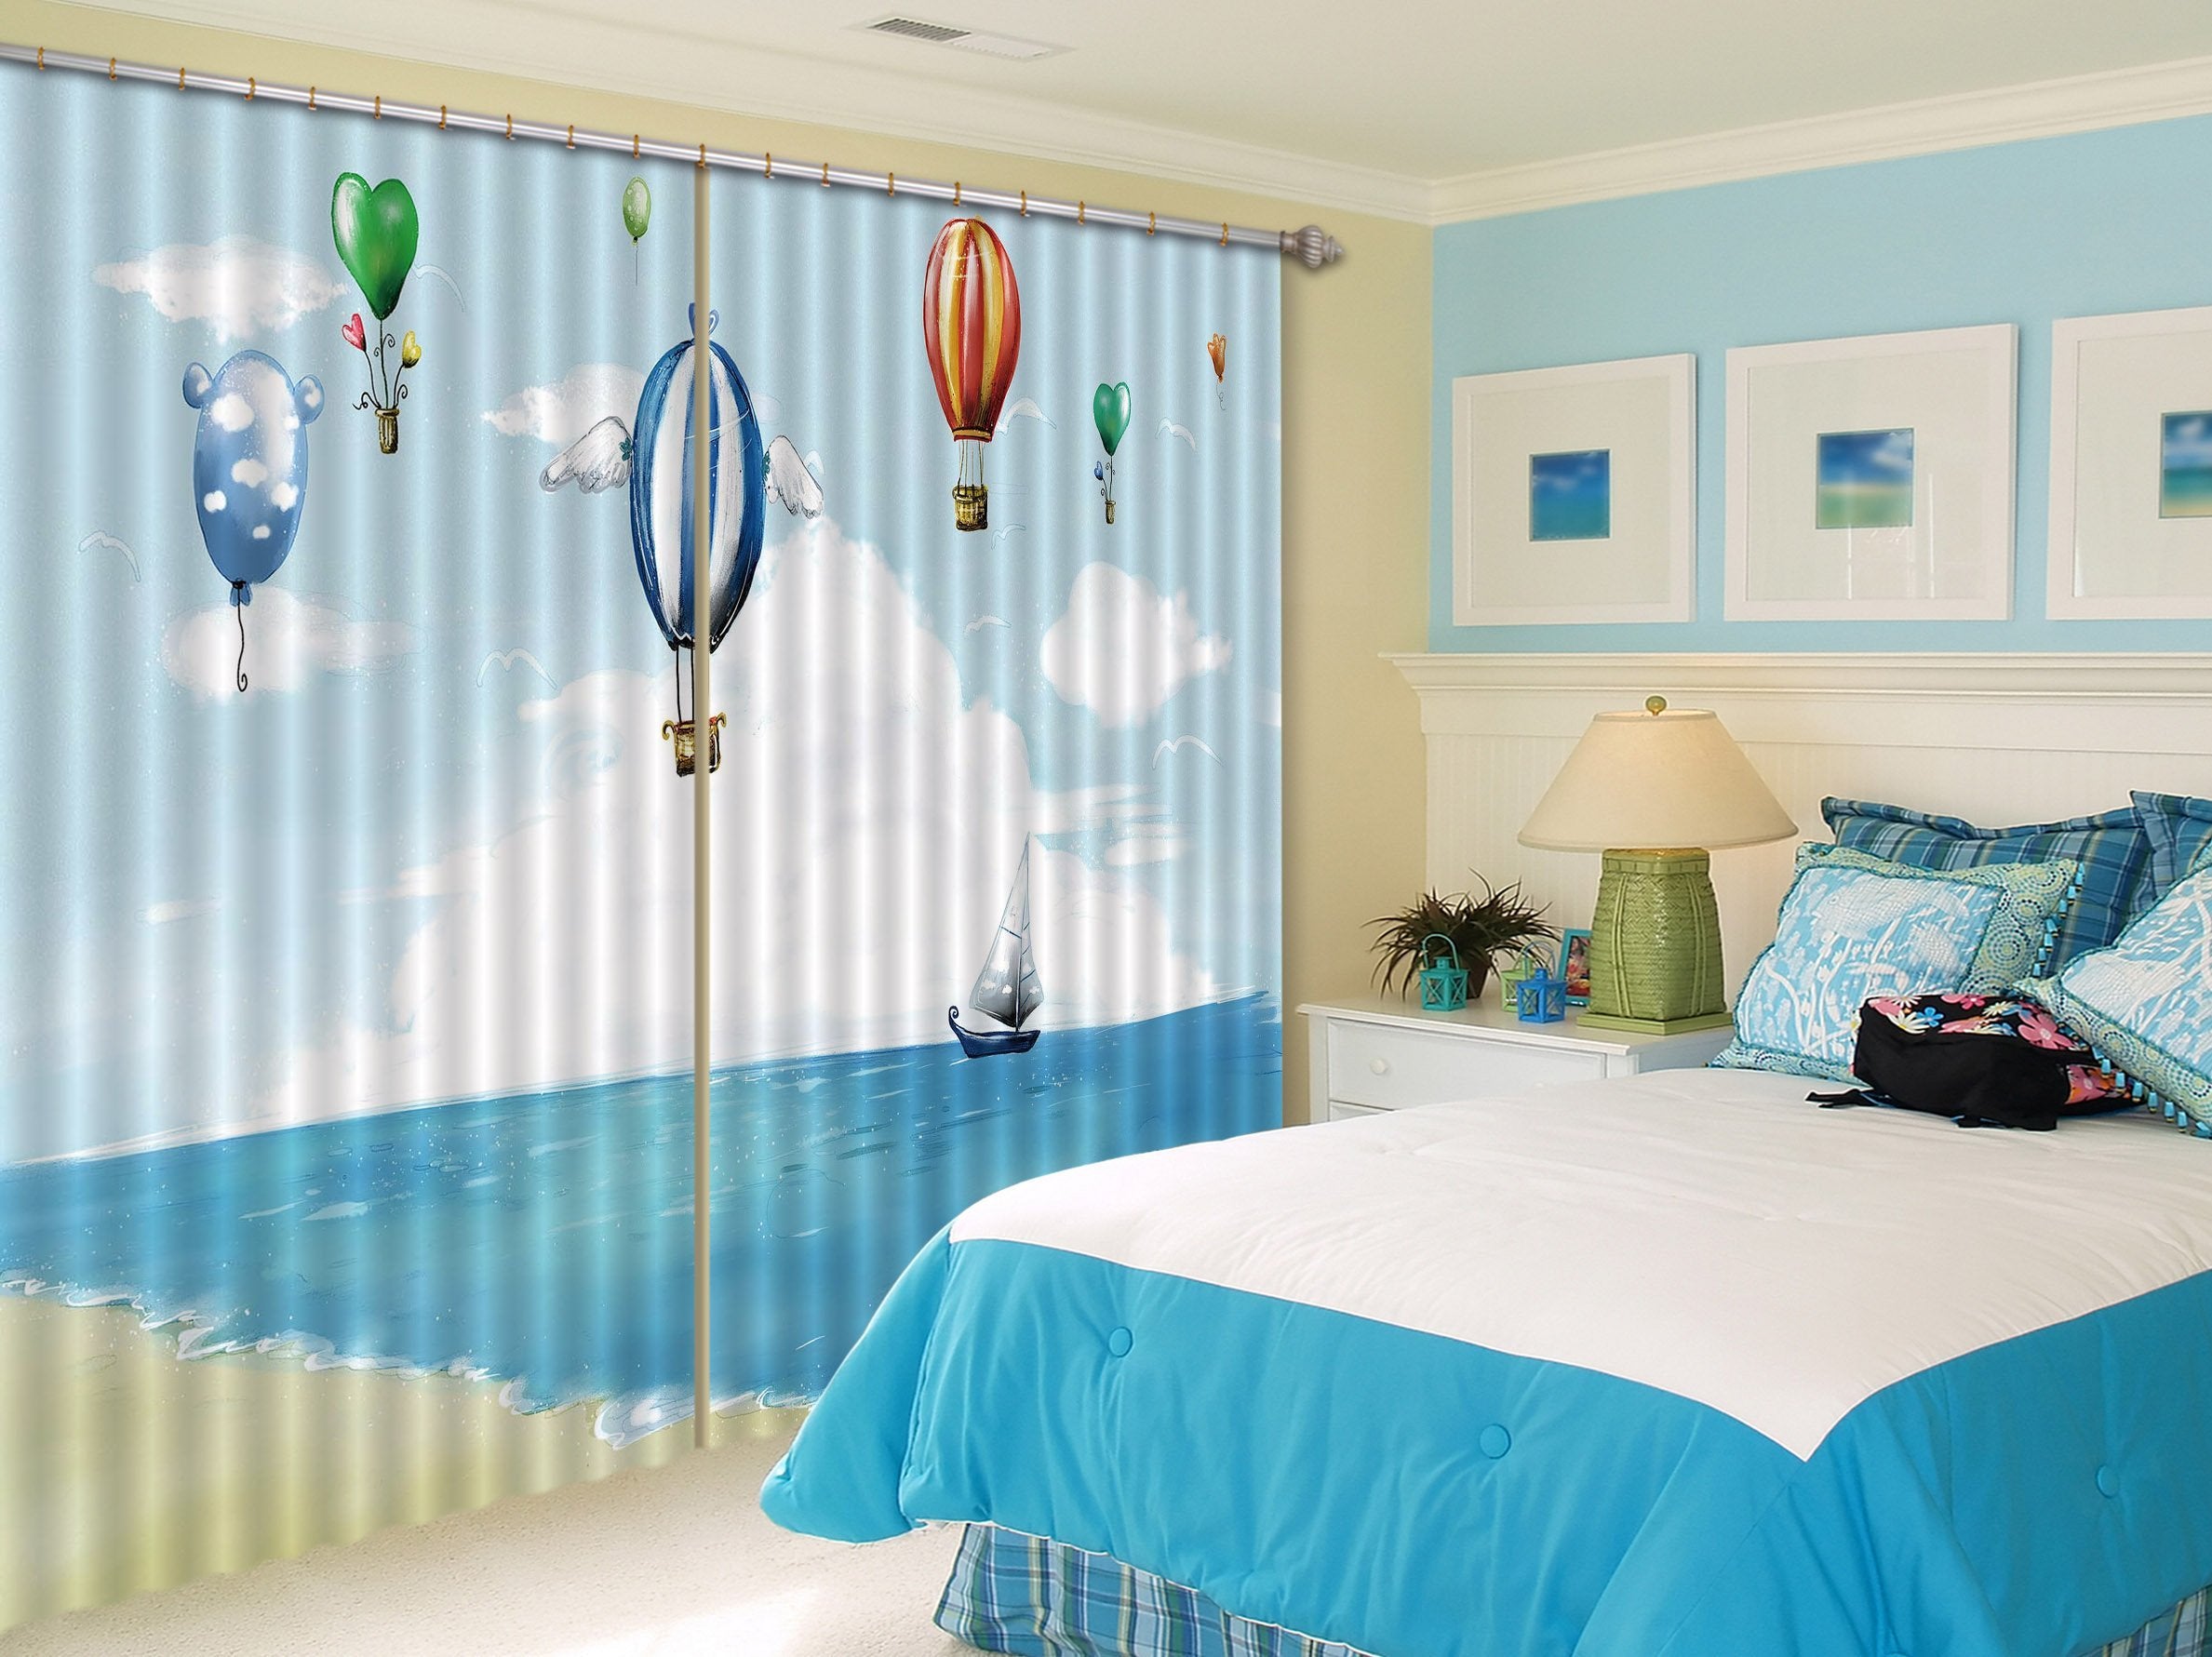 3D Sea Flying Balloons 2471 Curtains Drapes Wallpaper AJ Wallpaper 